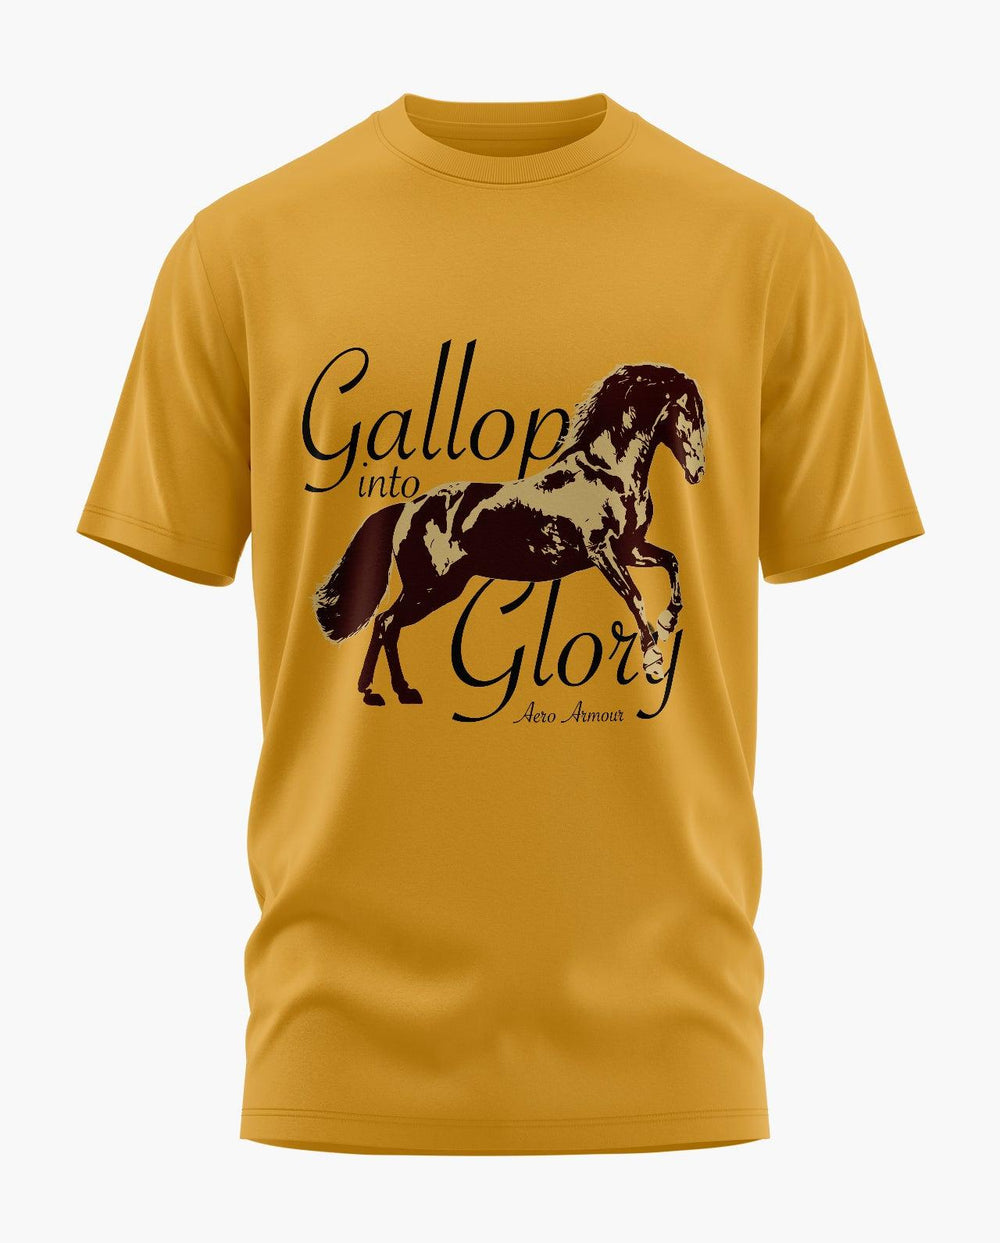 Gallop into Glory T-Shirt - Aero Armour